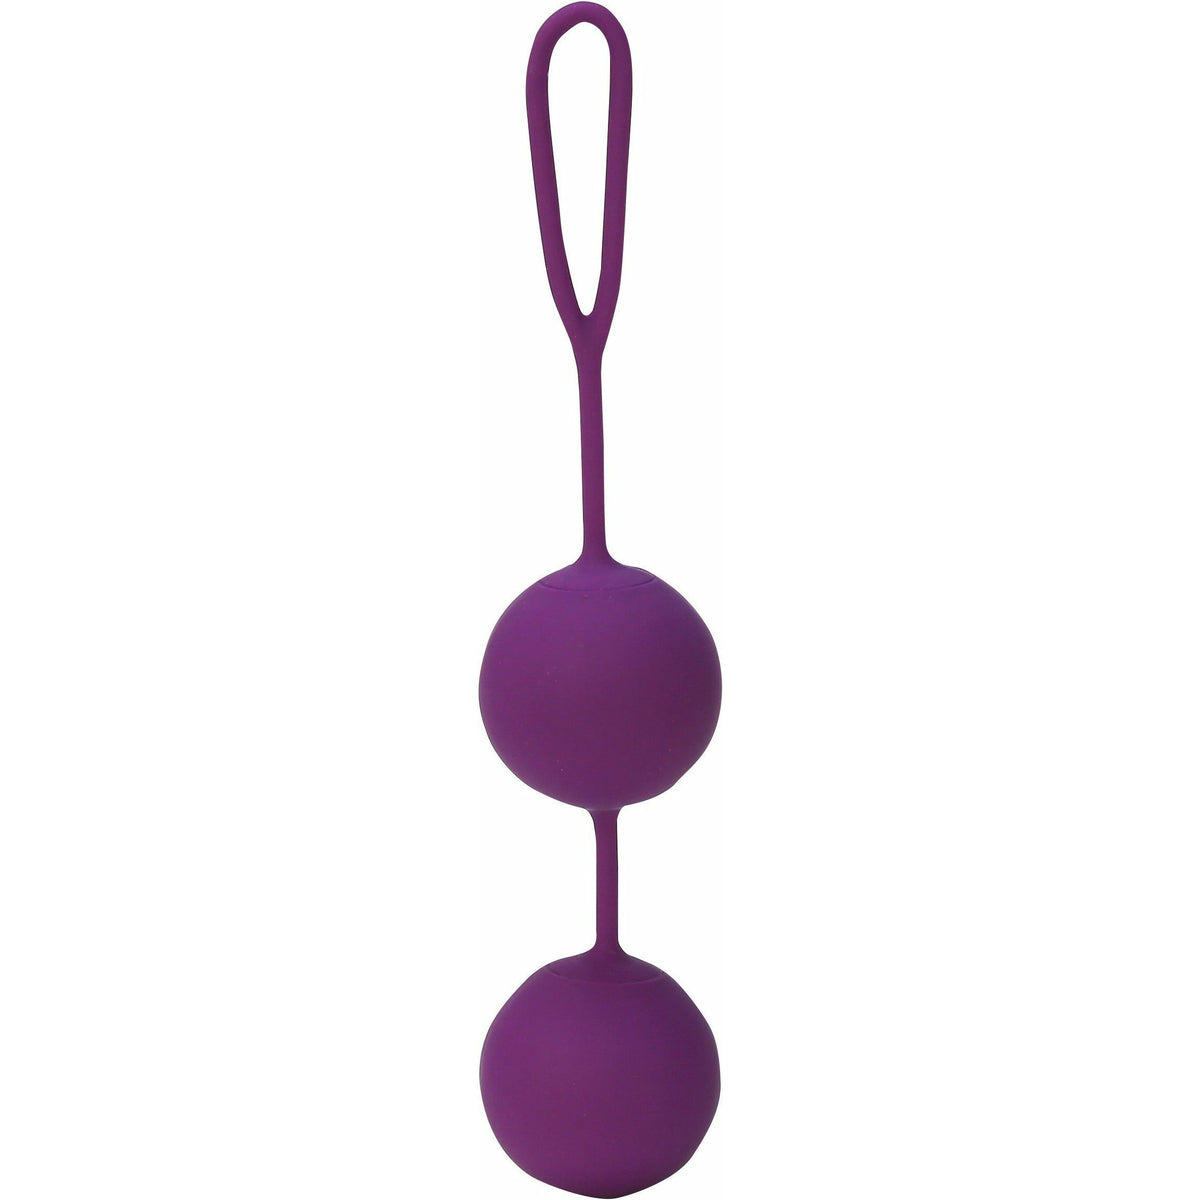 Seven Creations Duplicity Duo K-Balls - Purple